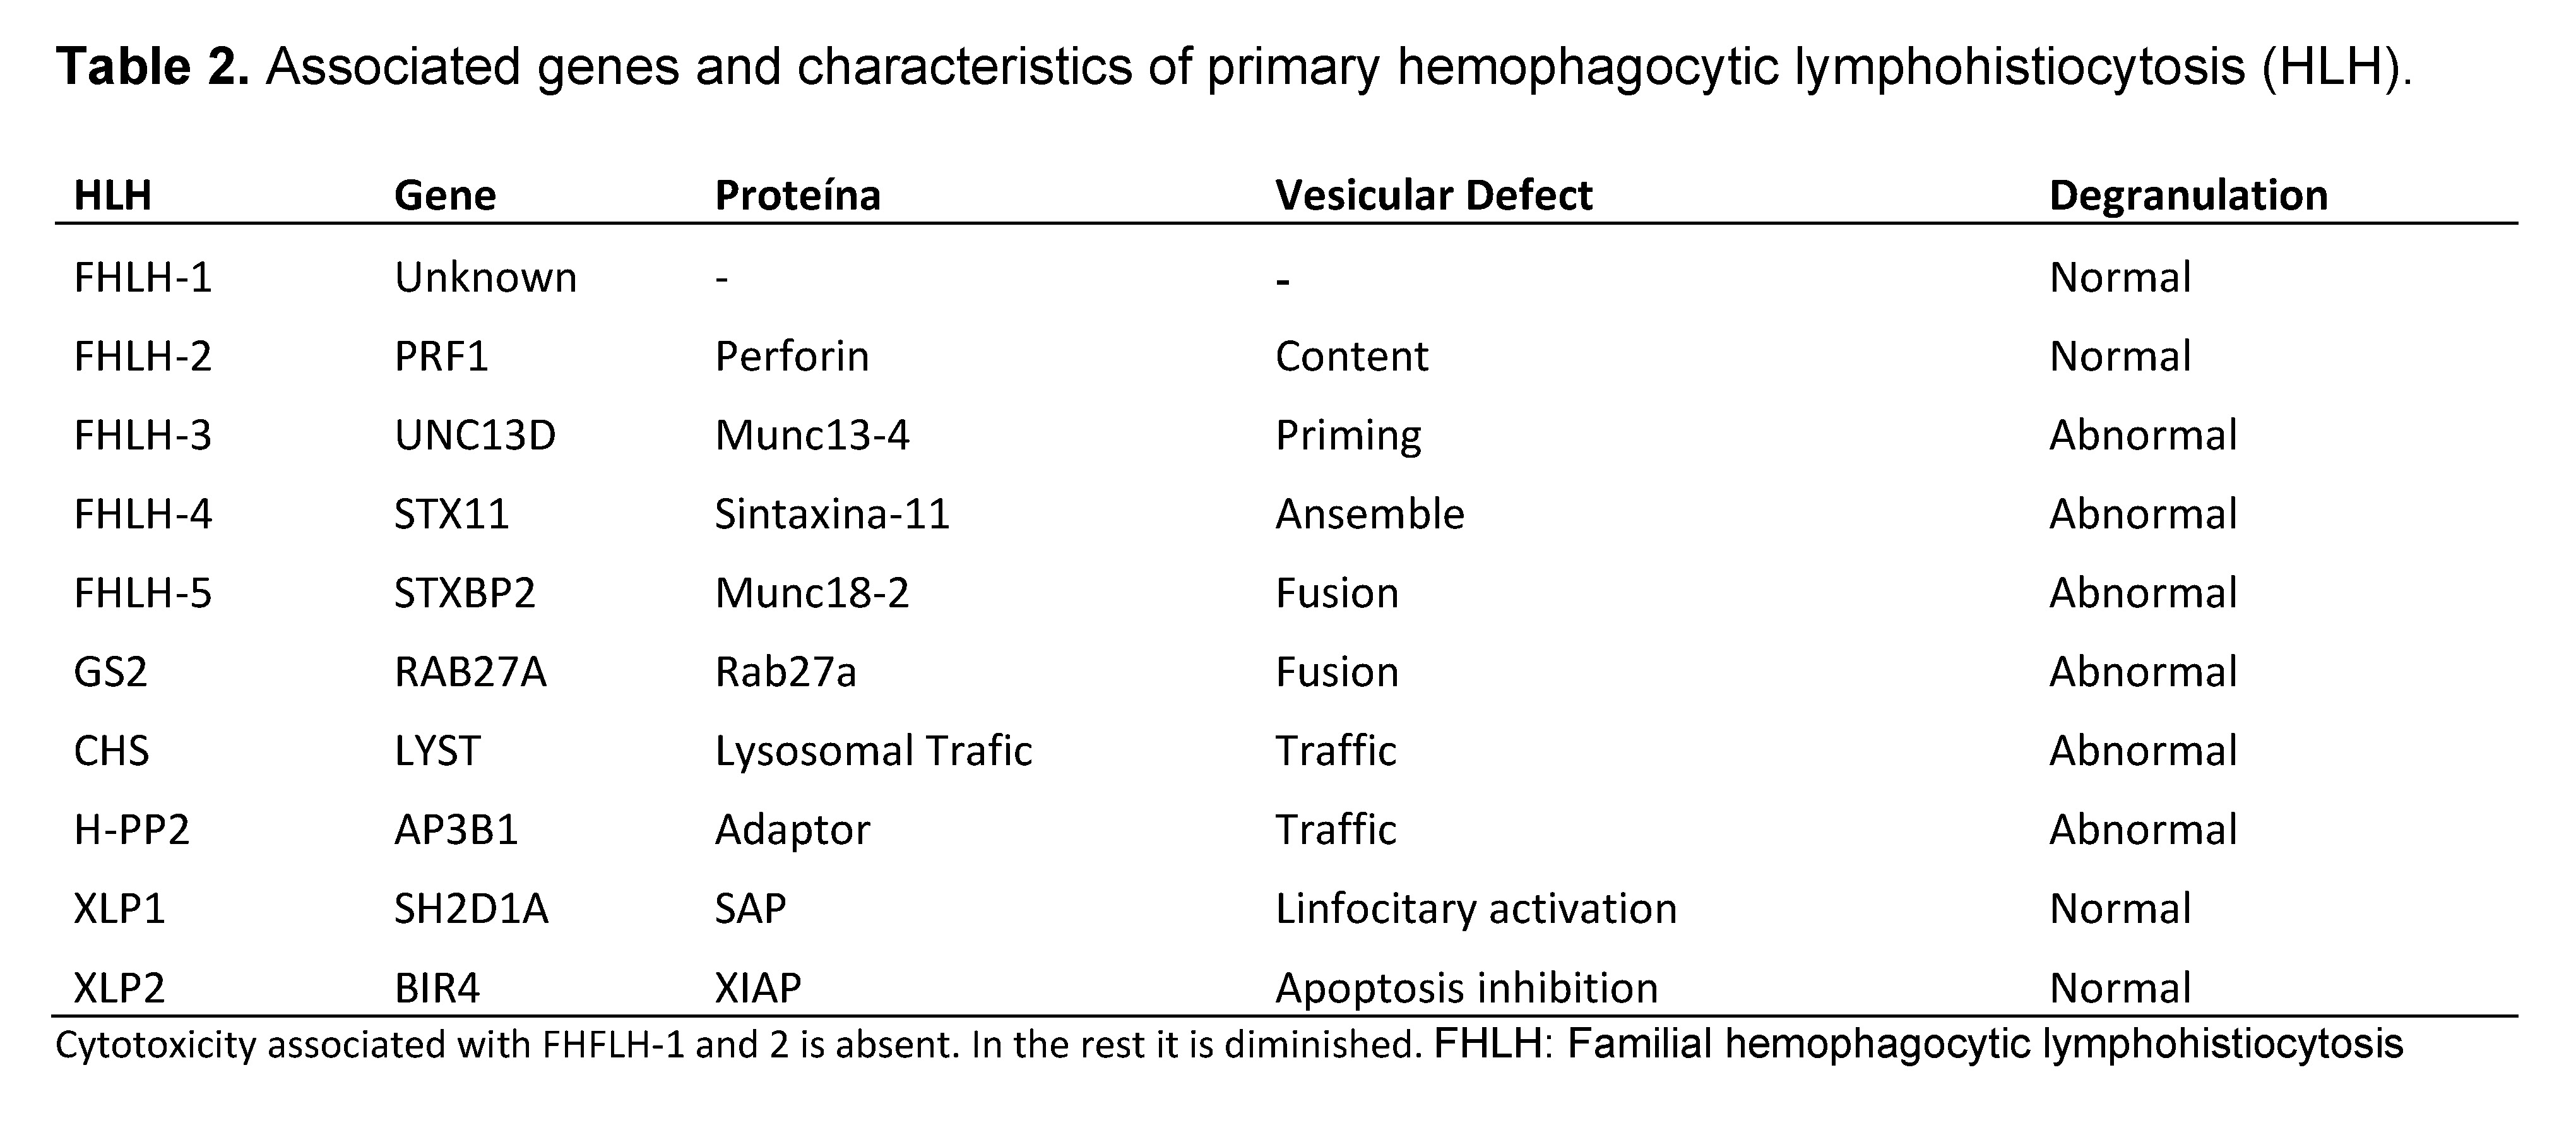 Associated genes and characteristics of primary hemophagocytic lymphohistiocytosis.